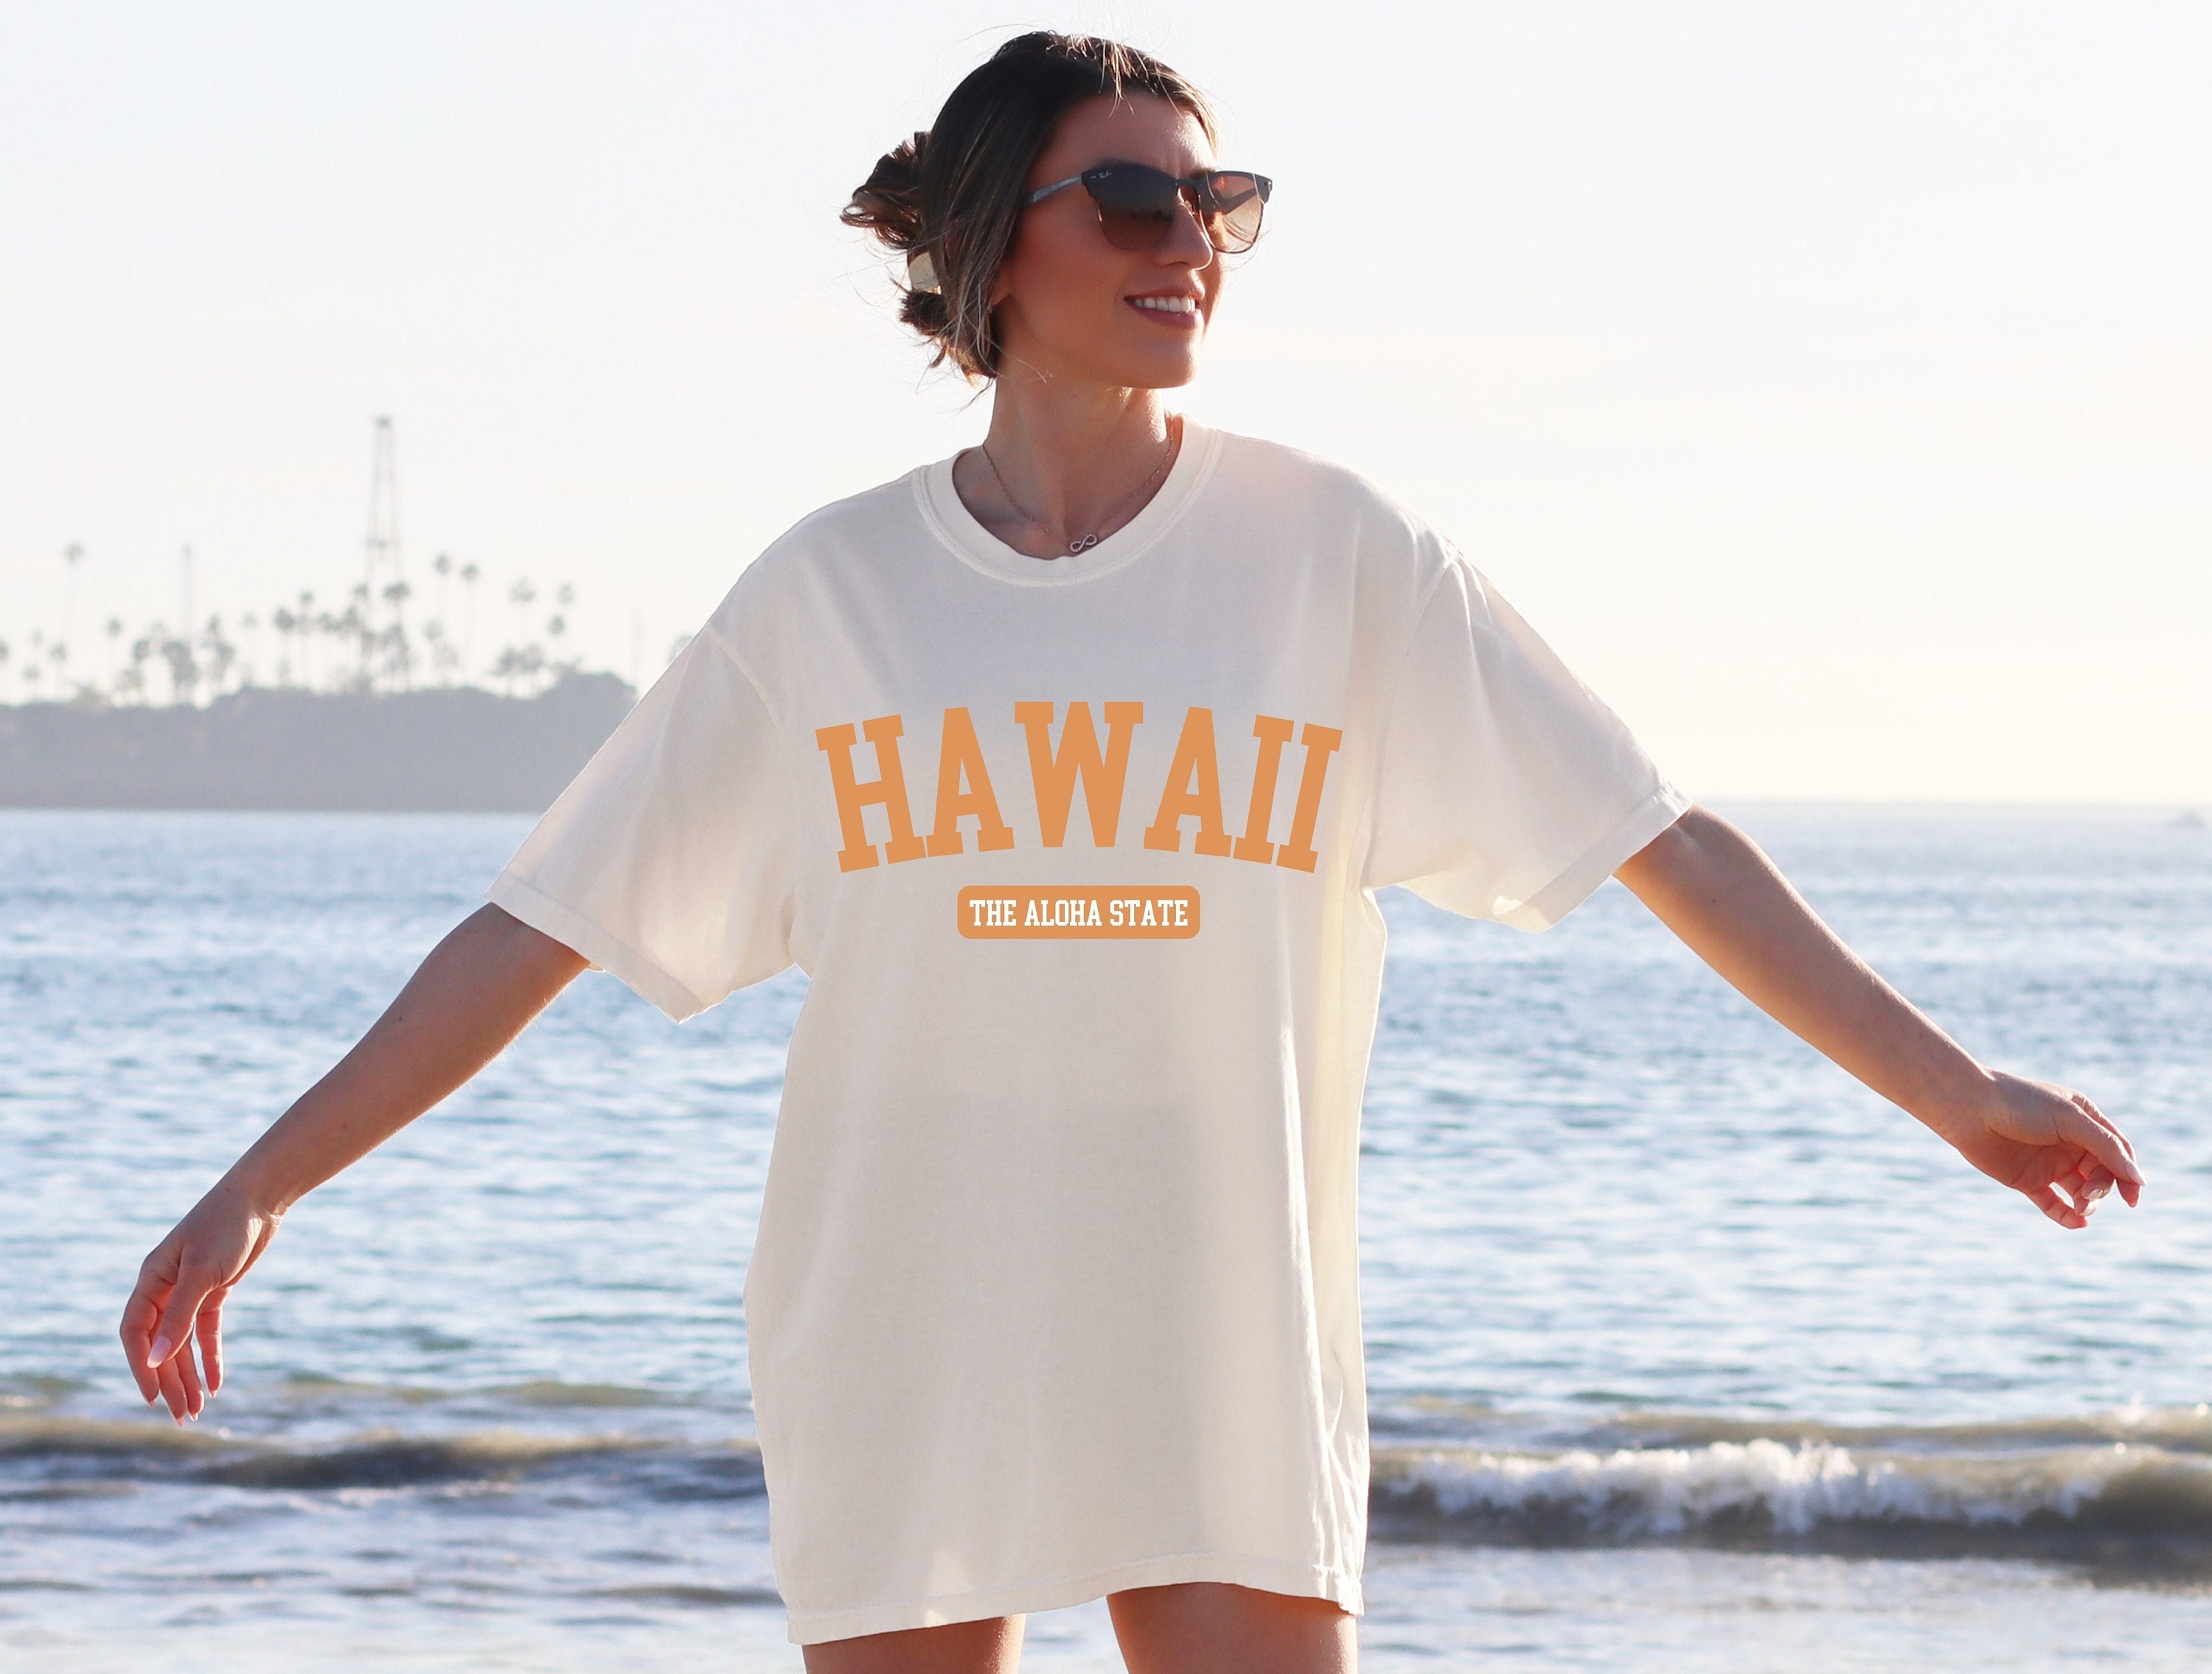 Coconut Bra Flower Boobs  Hawaii Aloha Beaches Funny Shirt 